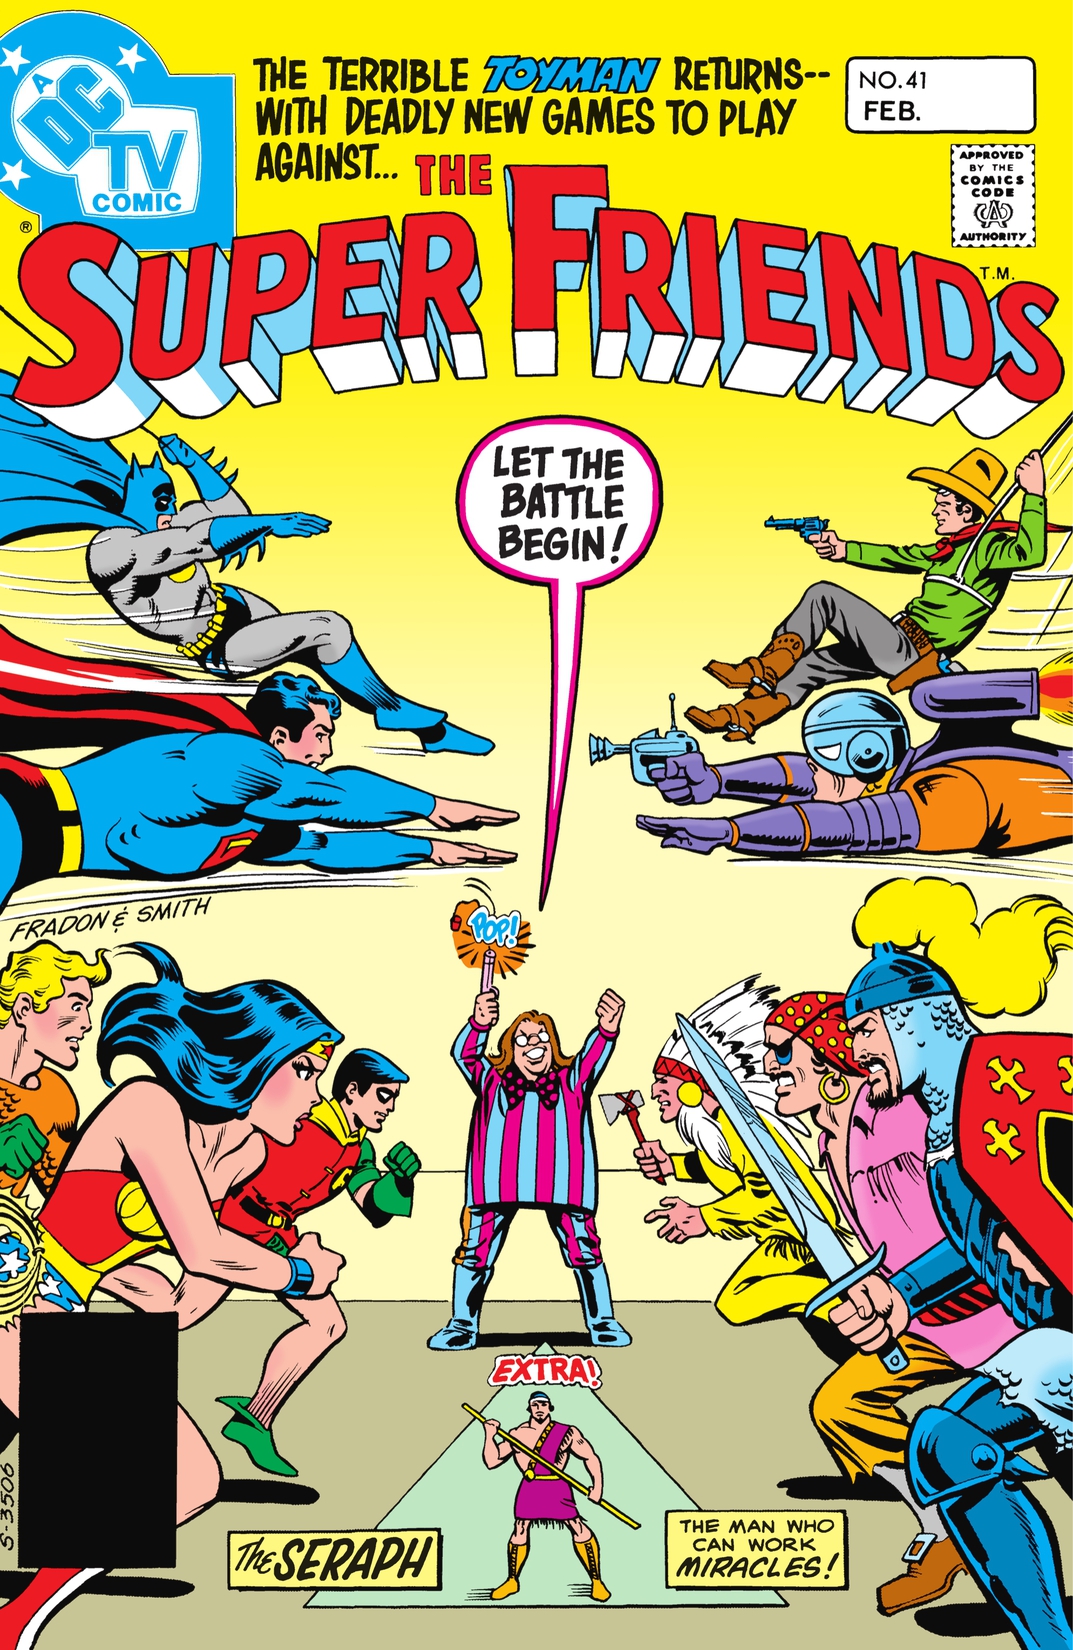 Super Friends (1976-1981) #41 preview images